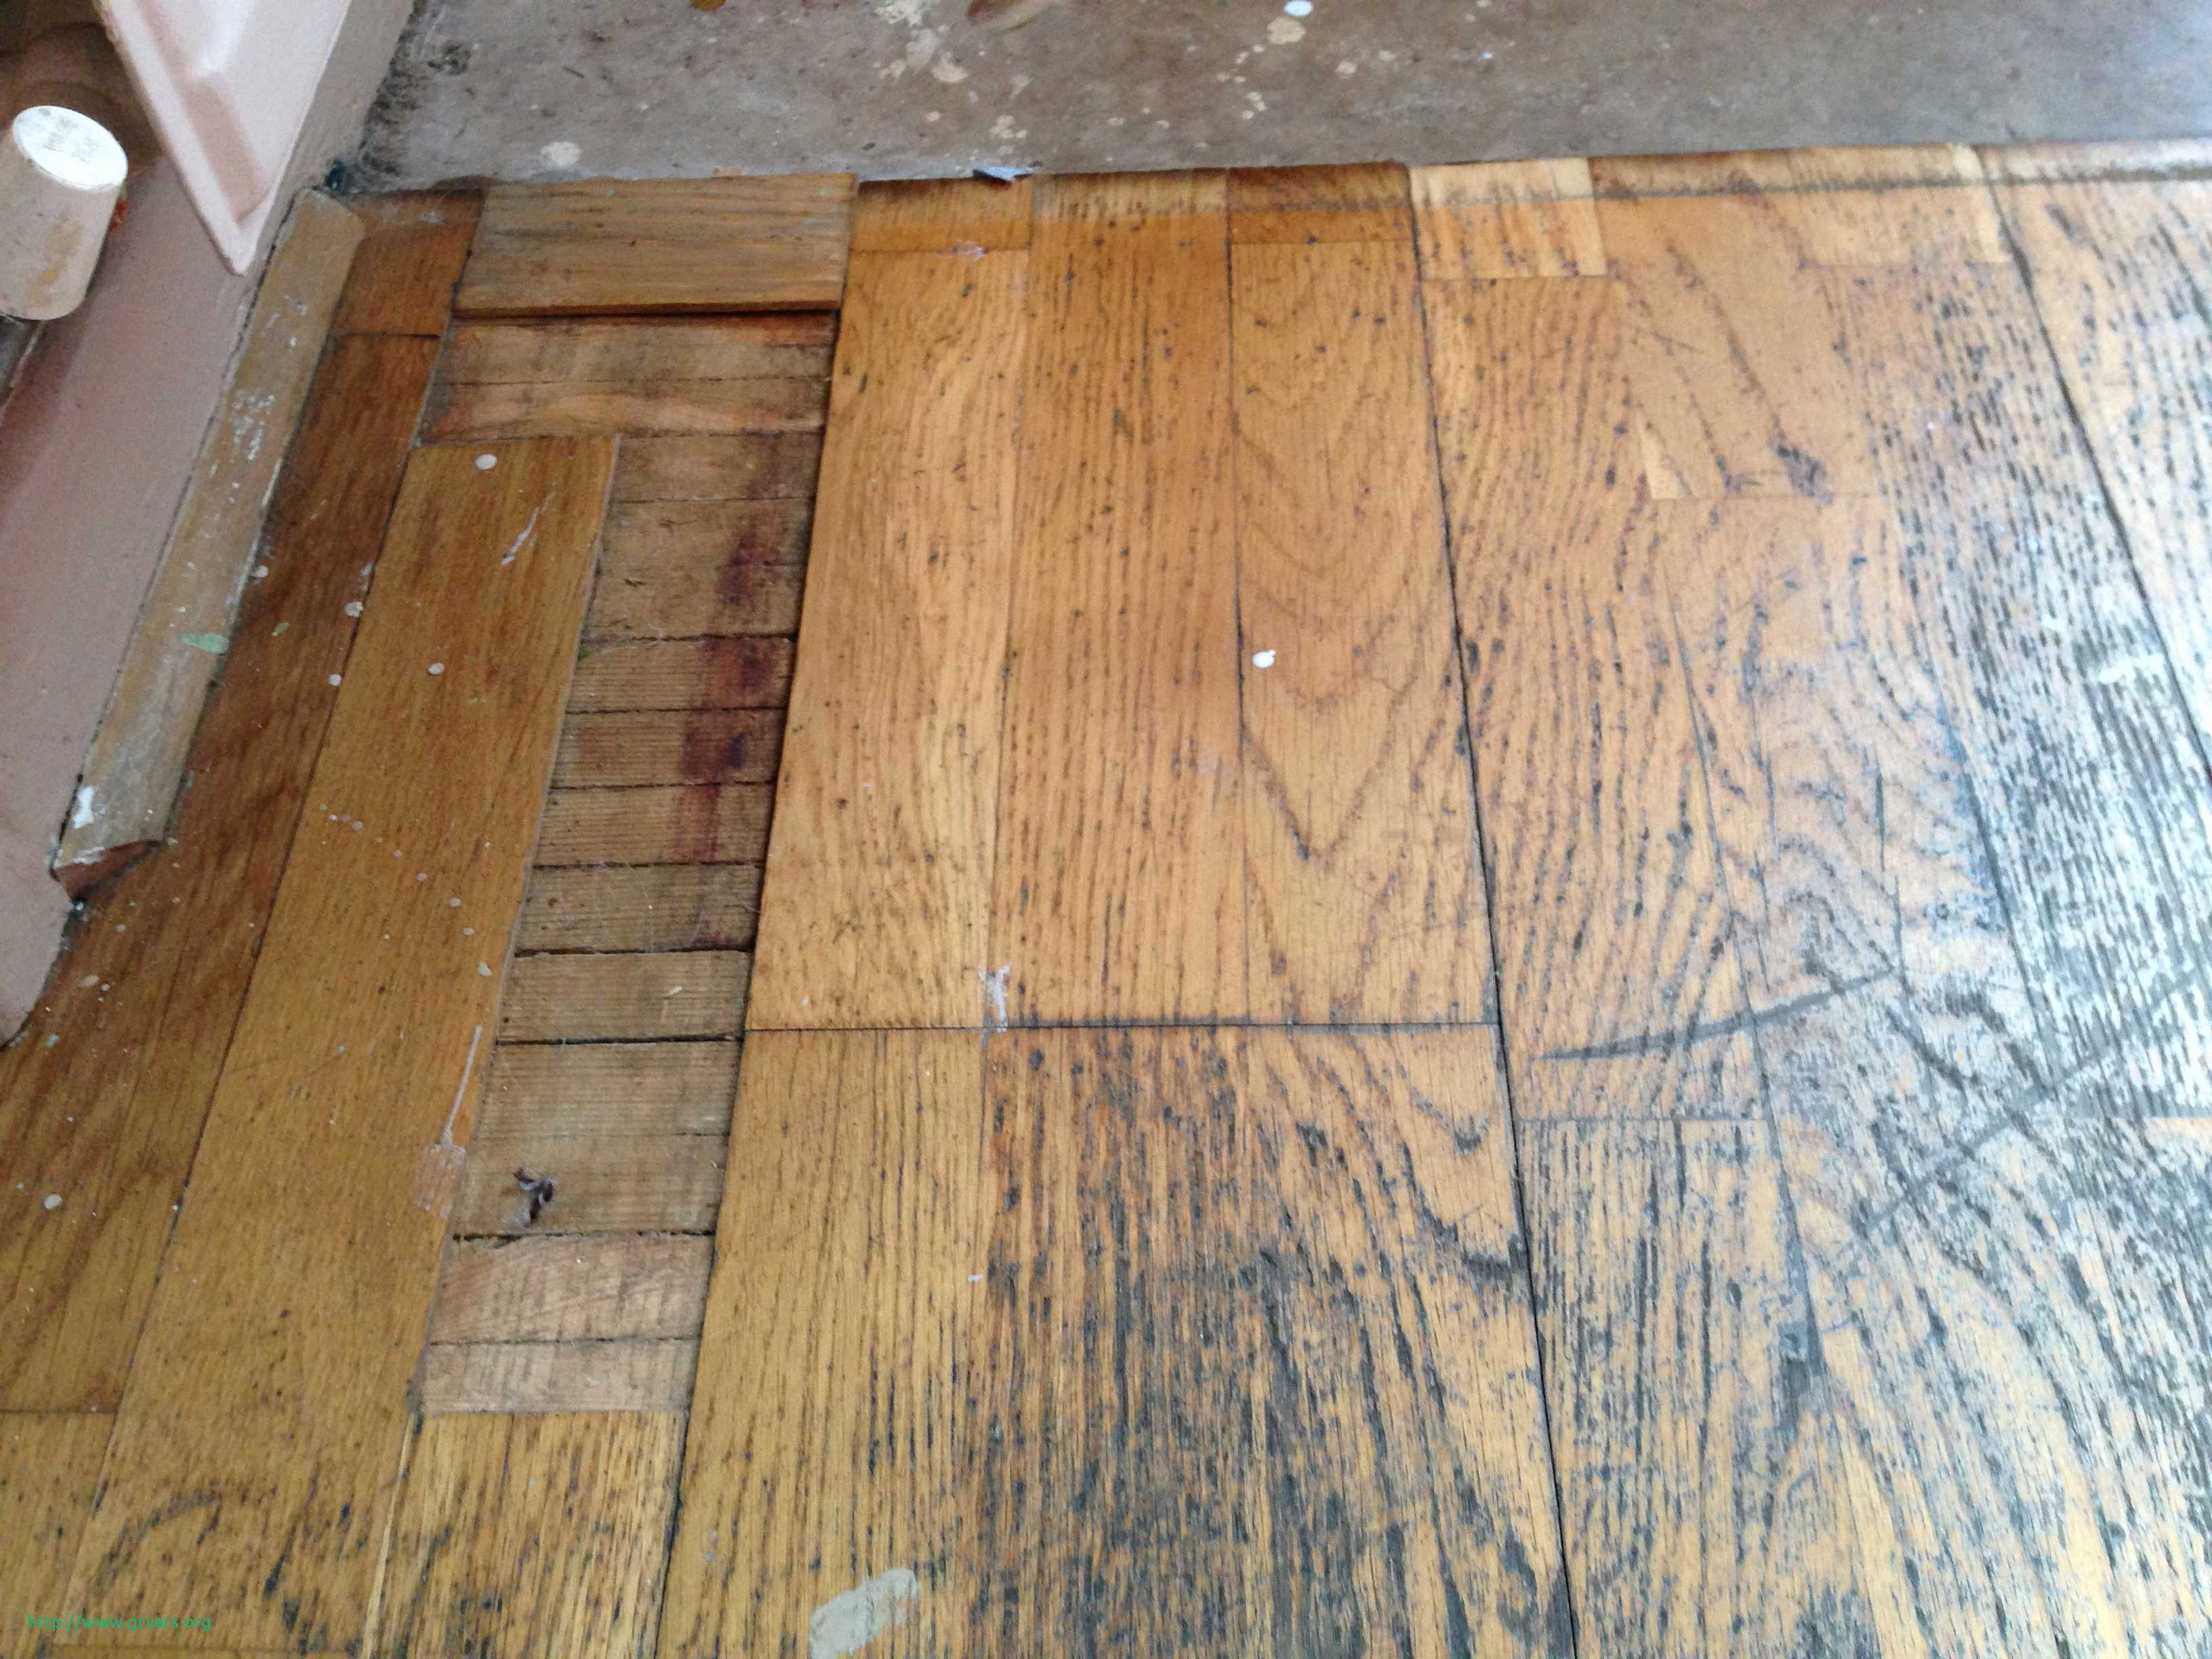 Hardwood Floor Scratch Repair Of 19 Impressionnant Restoring A Wooden Floor Ideas Blog with Regard to Restoring A Wooden Floor Frais Inspirational How to Repair Laminate Flooring Water Damage